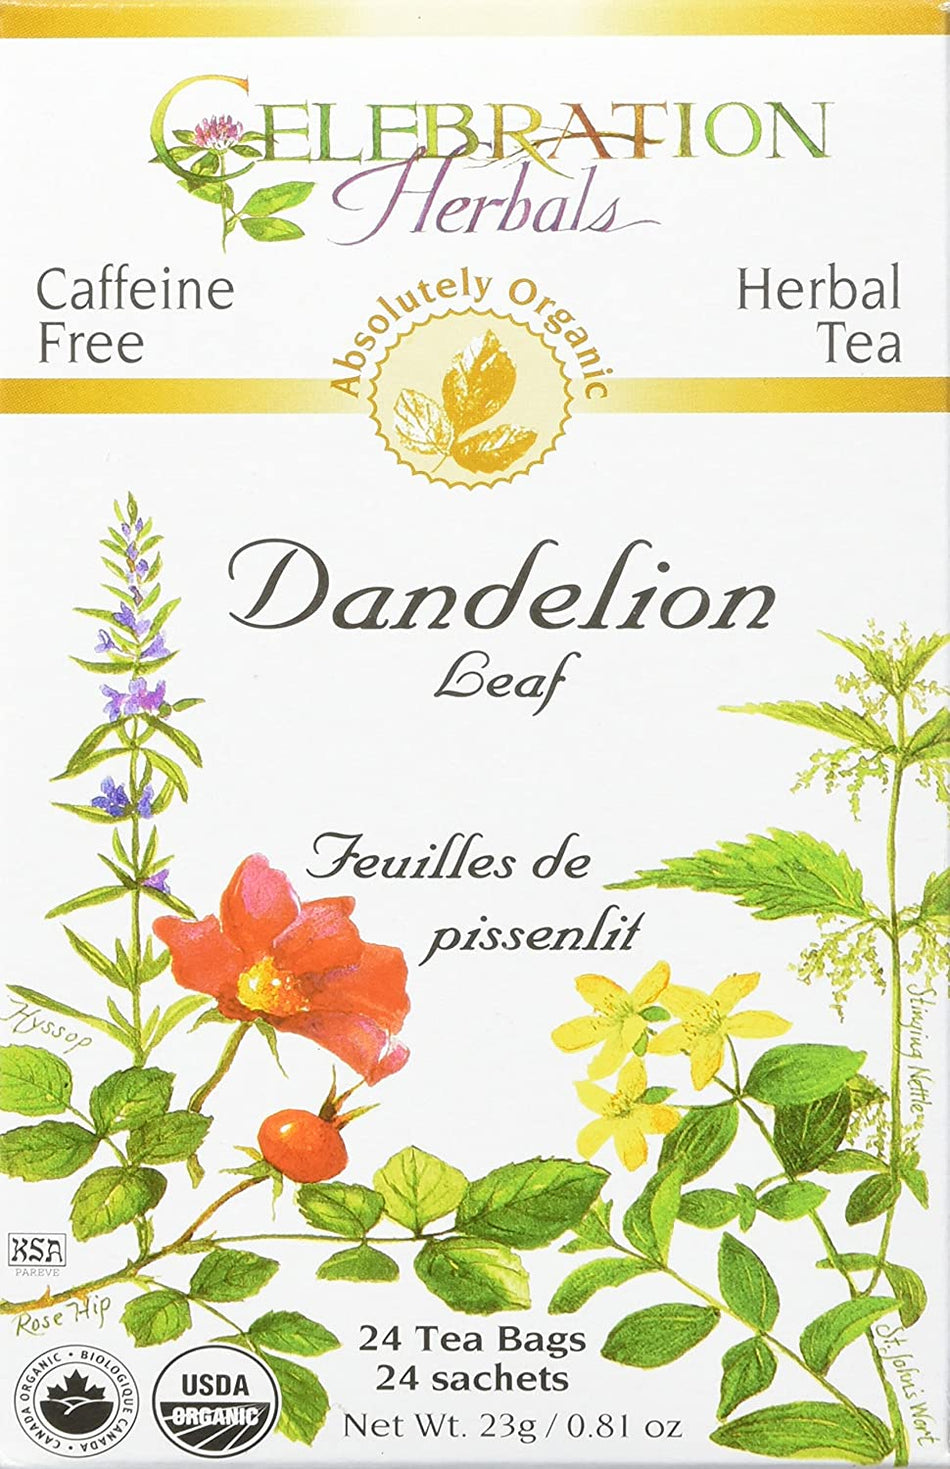 Dandelion Leaf / Diente de León